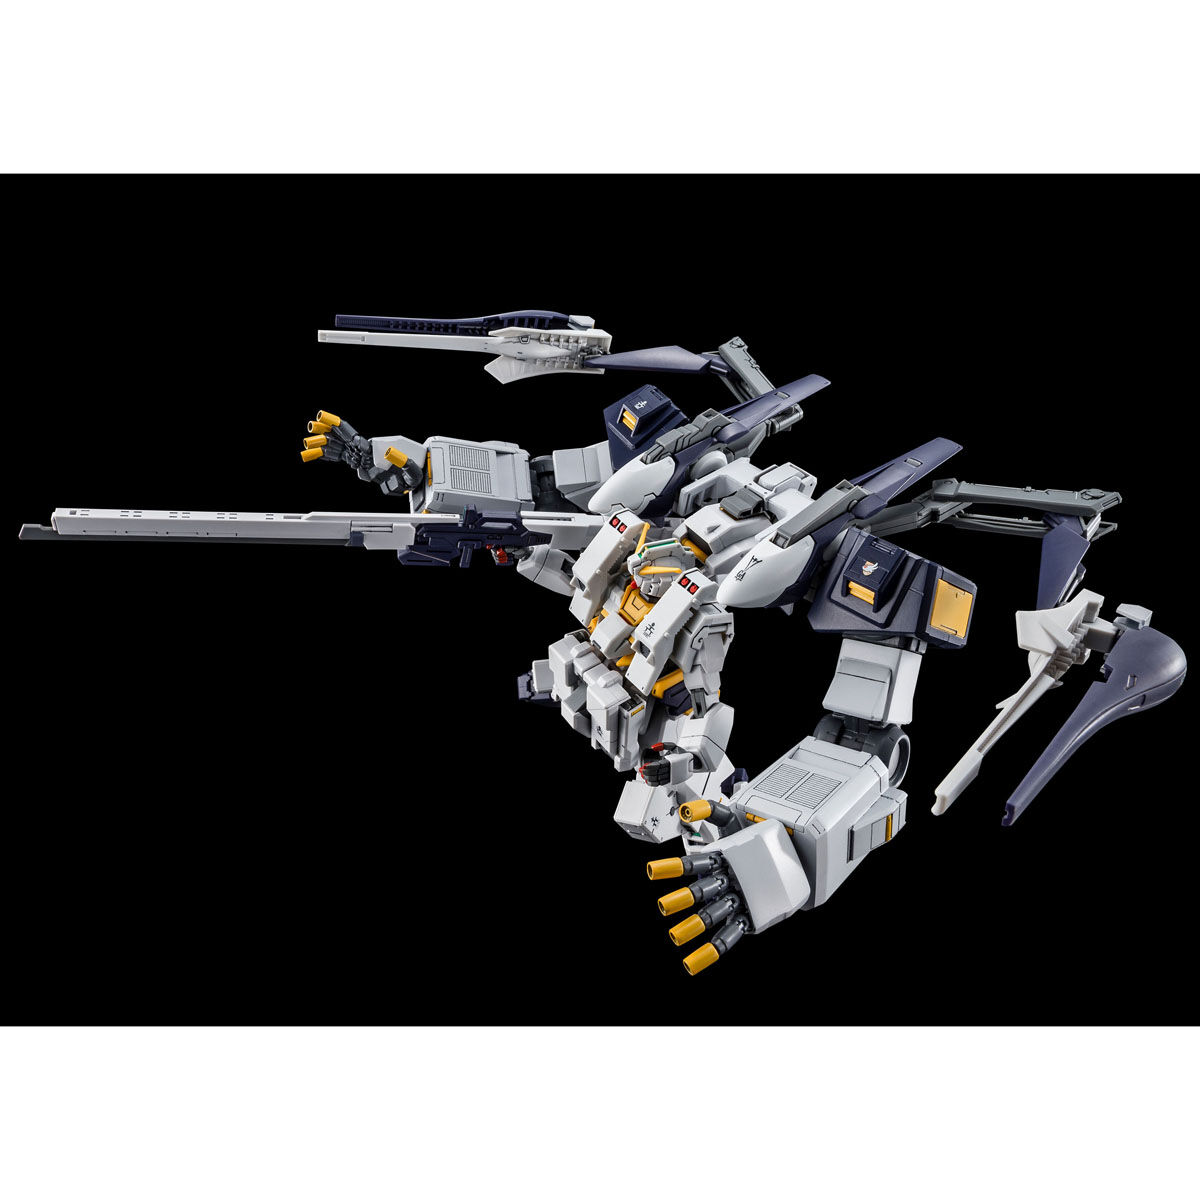 HGUC 1/144 RX-121-2P Gundam TR-1[Hazel Owsla]Gigantic Arm Unit